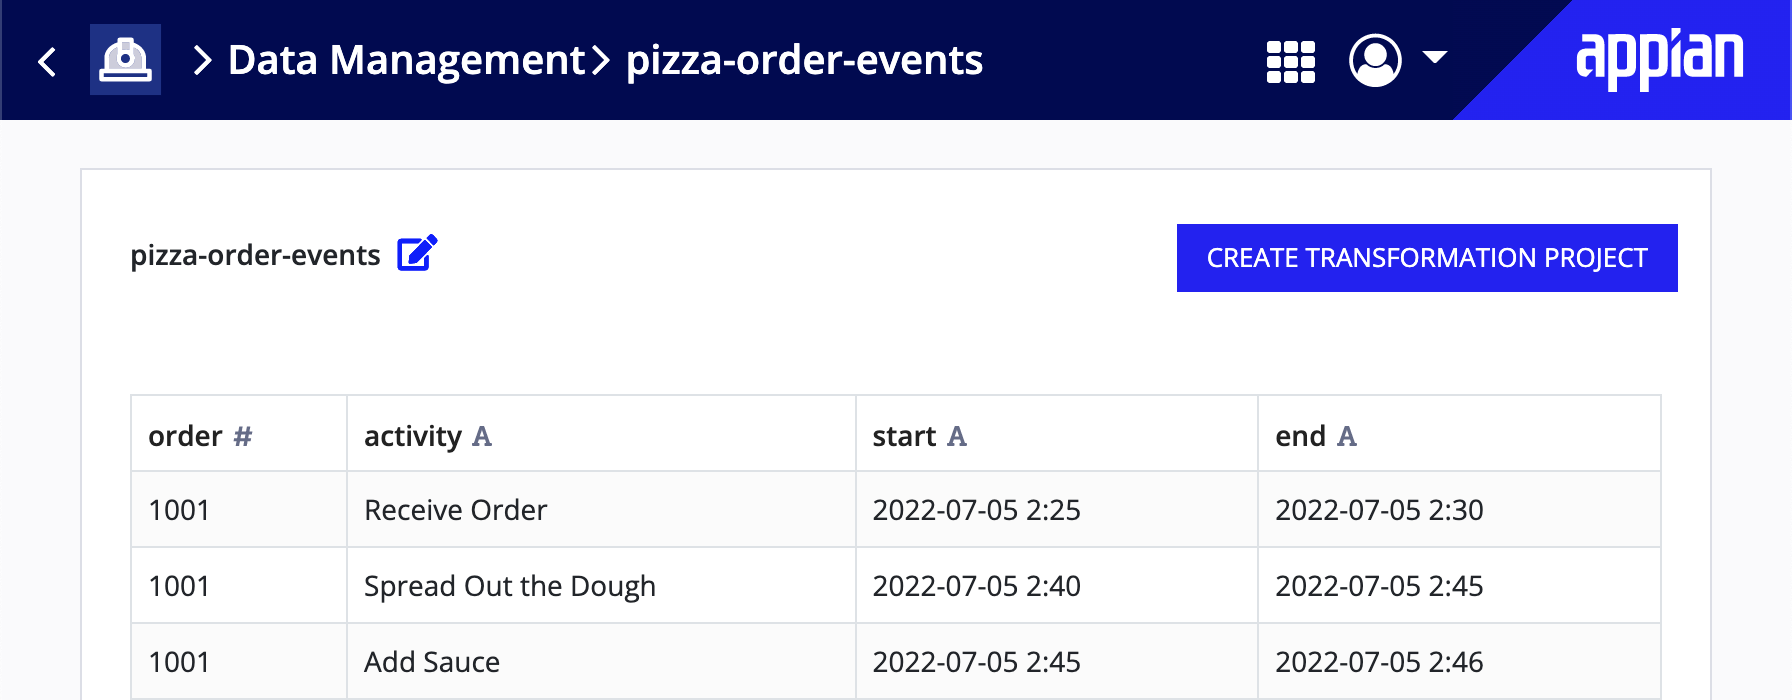 View pizza-order data set